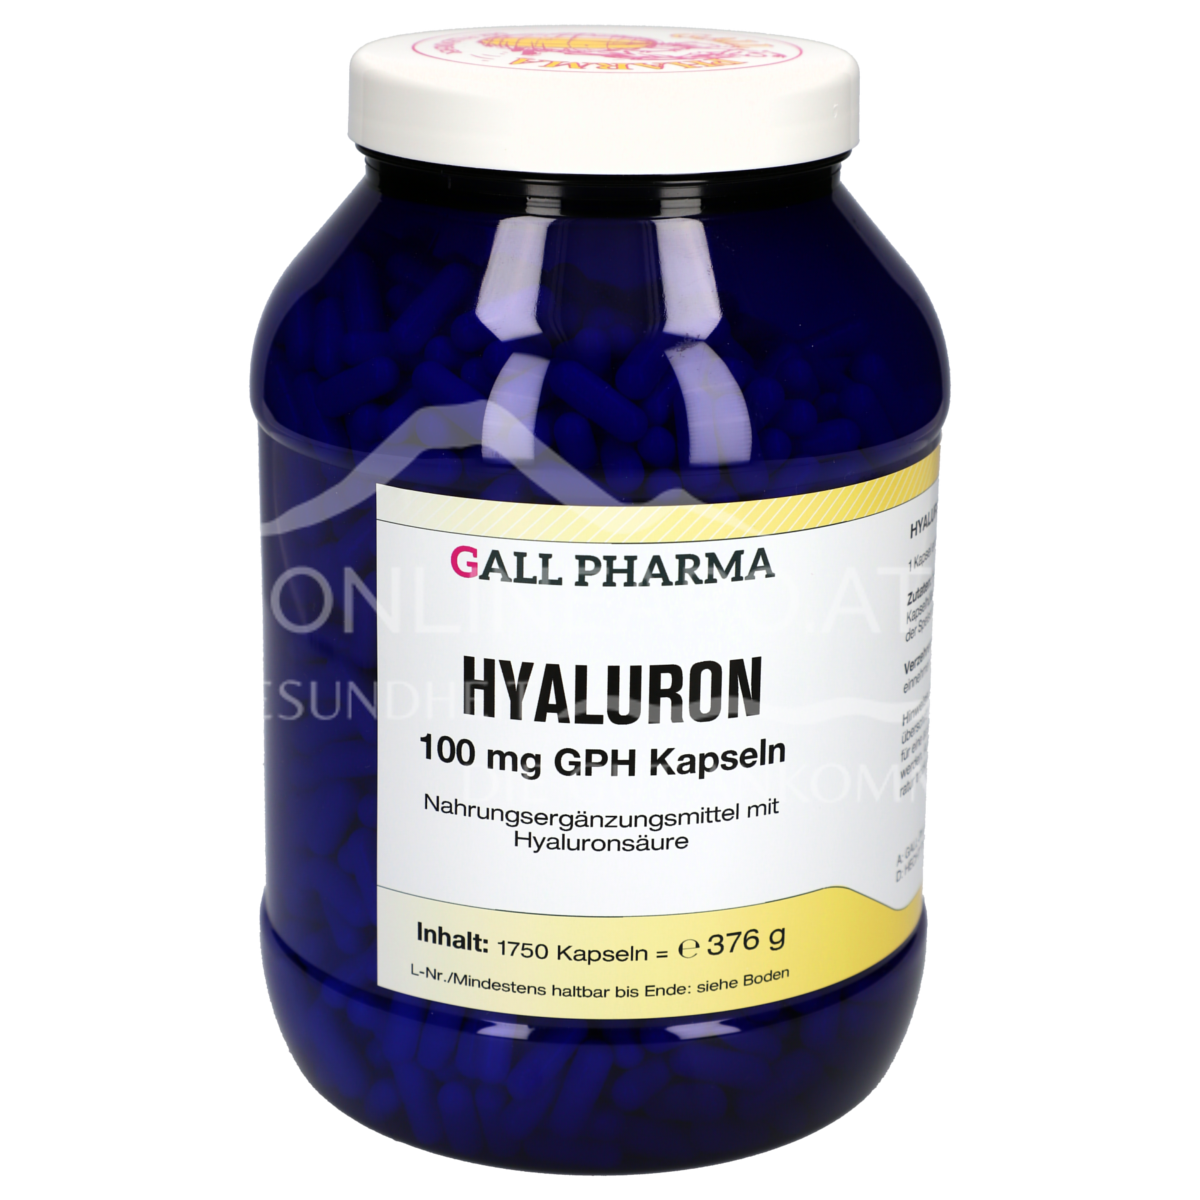 Gall Pharma Hyaluron 100 mg Kapseln